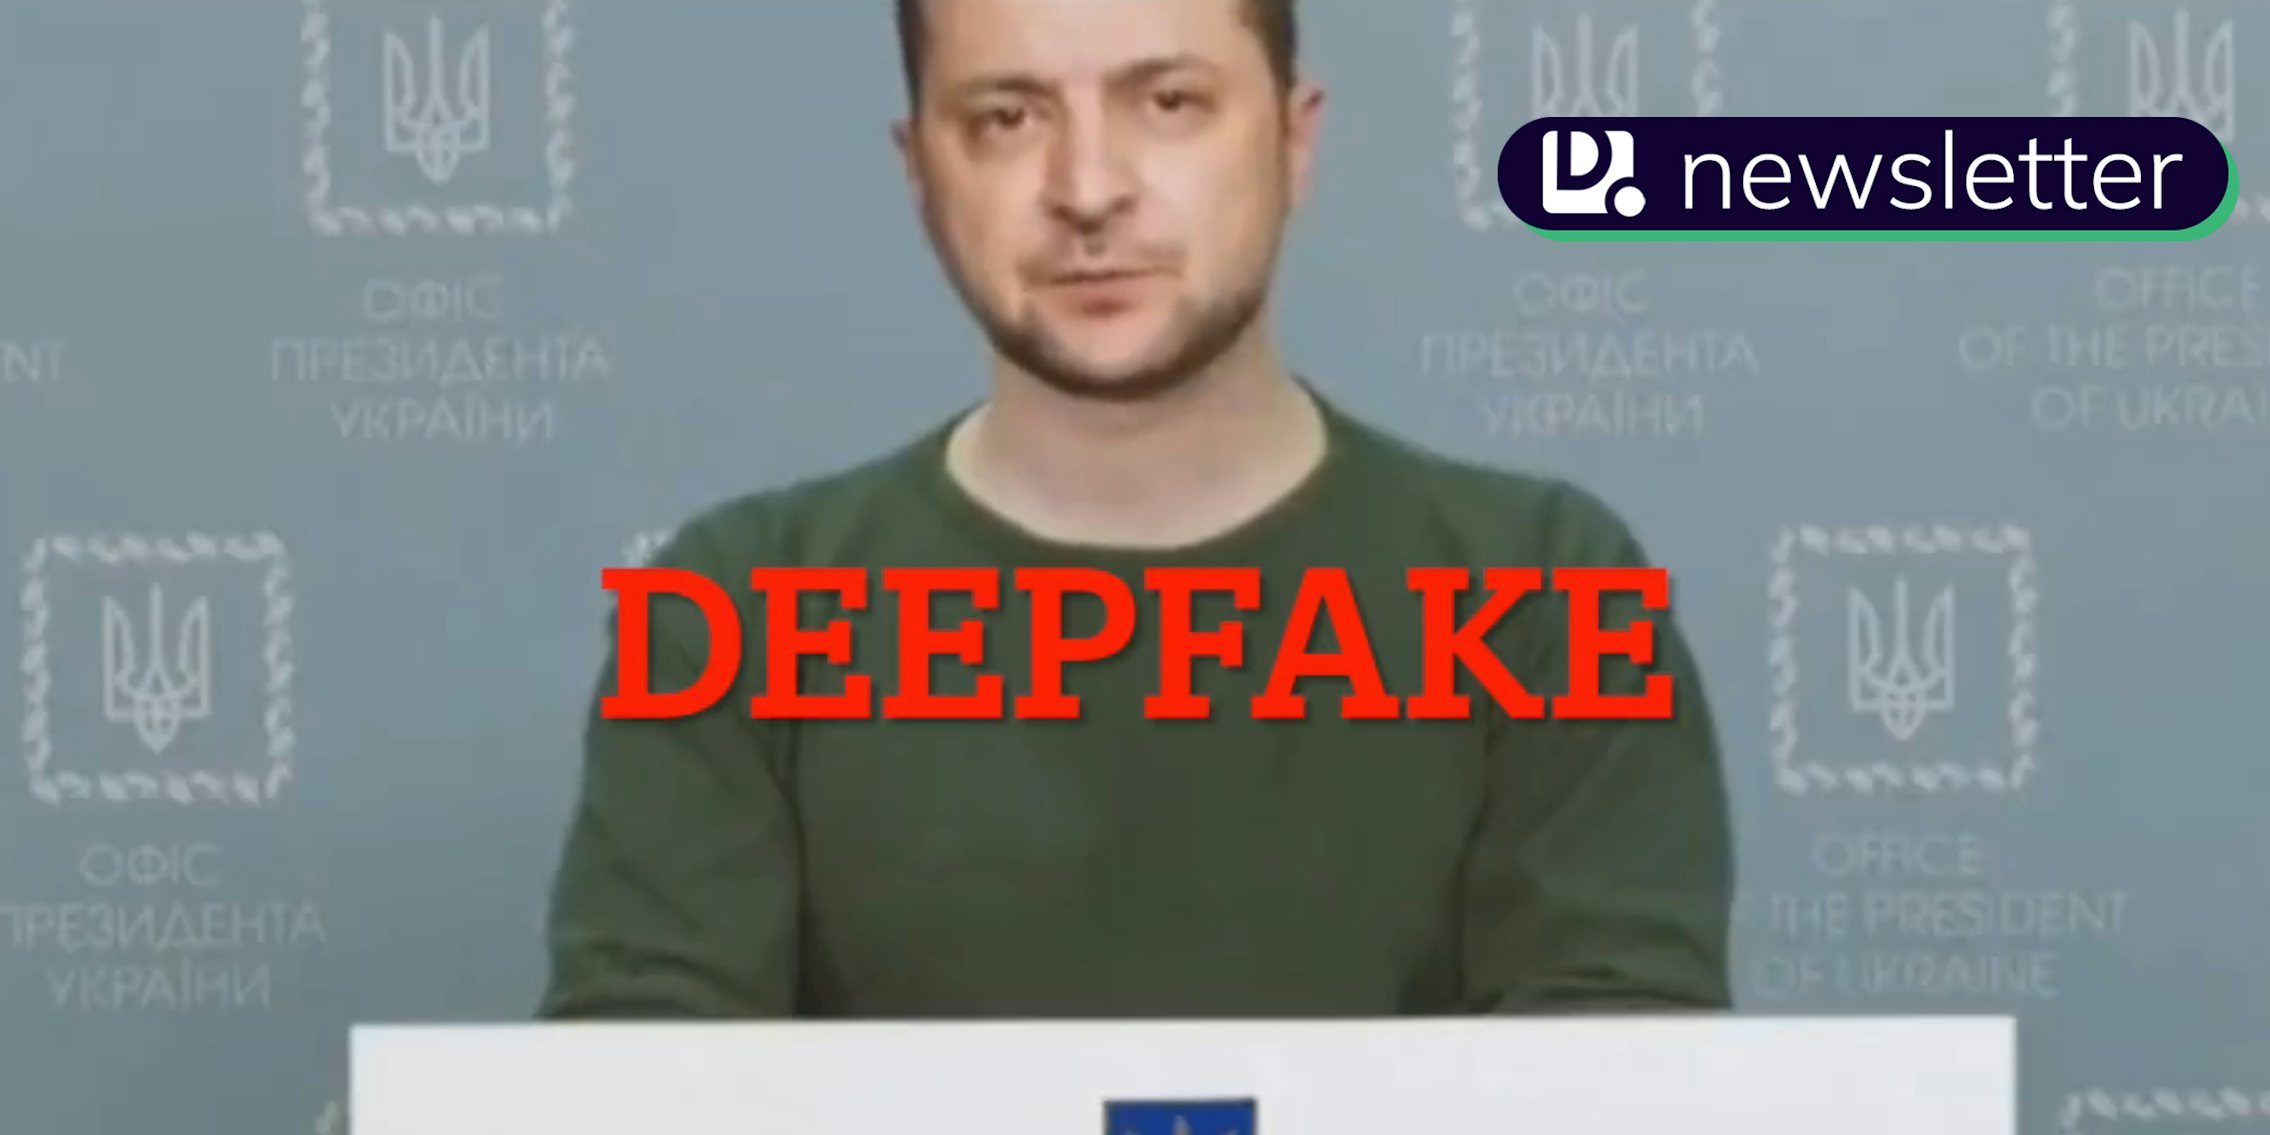 A screenshot of a deepfake of Ukrainian President Volodymyr Zelenskyy. In the top right corner is the Daily Dot newsletter logo.